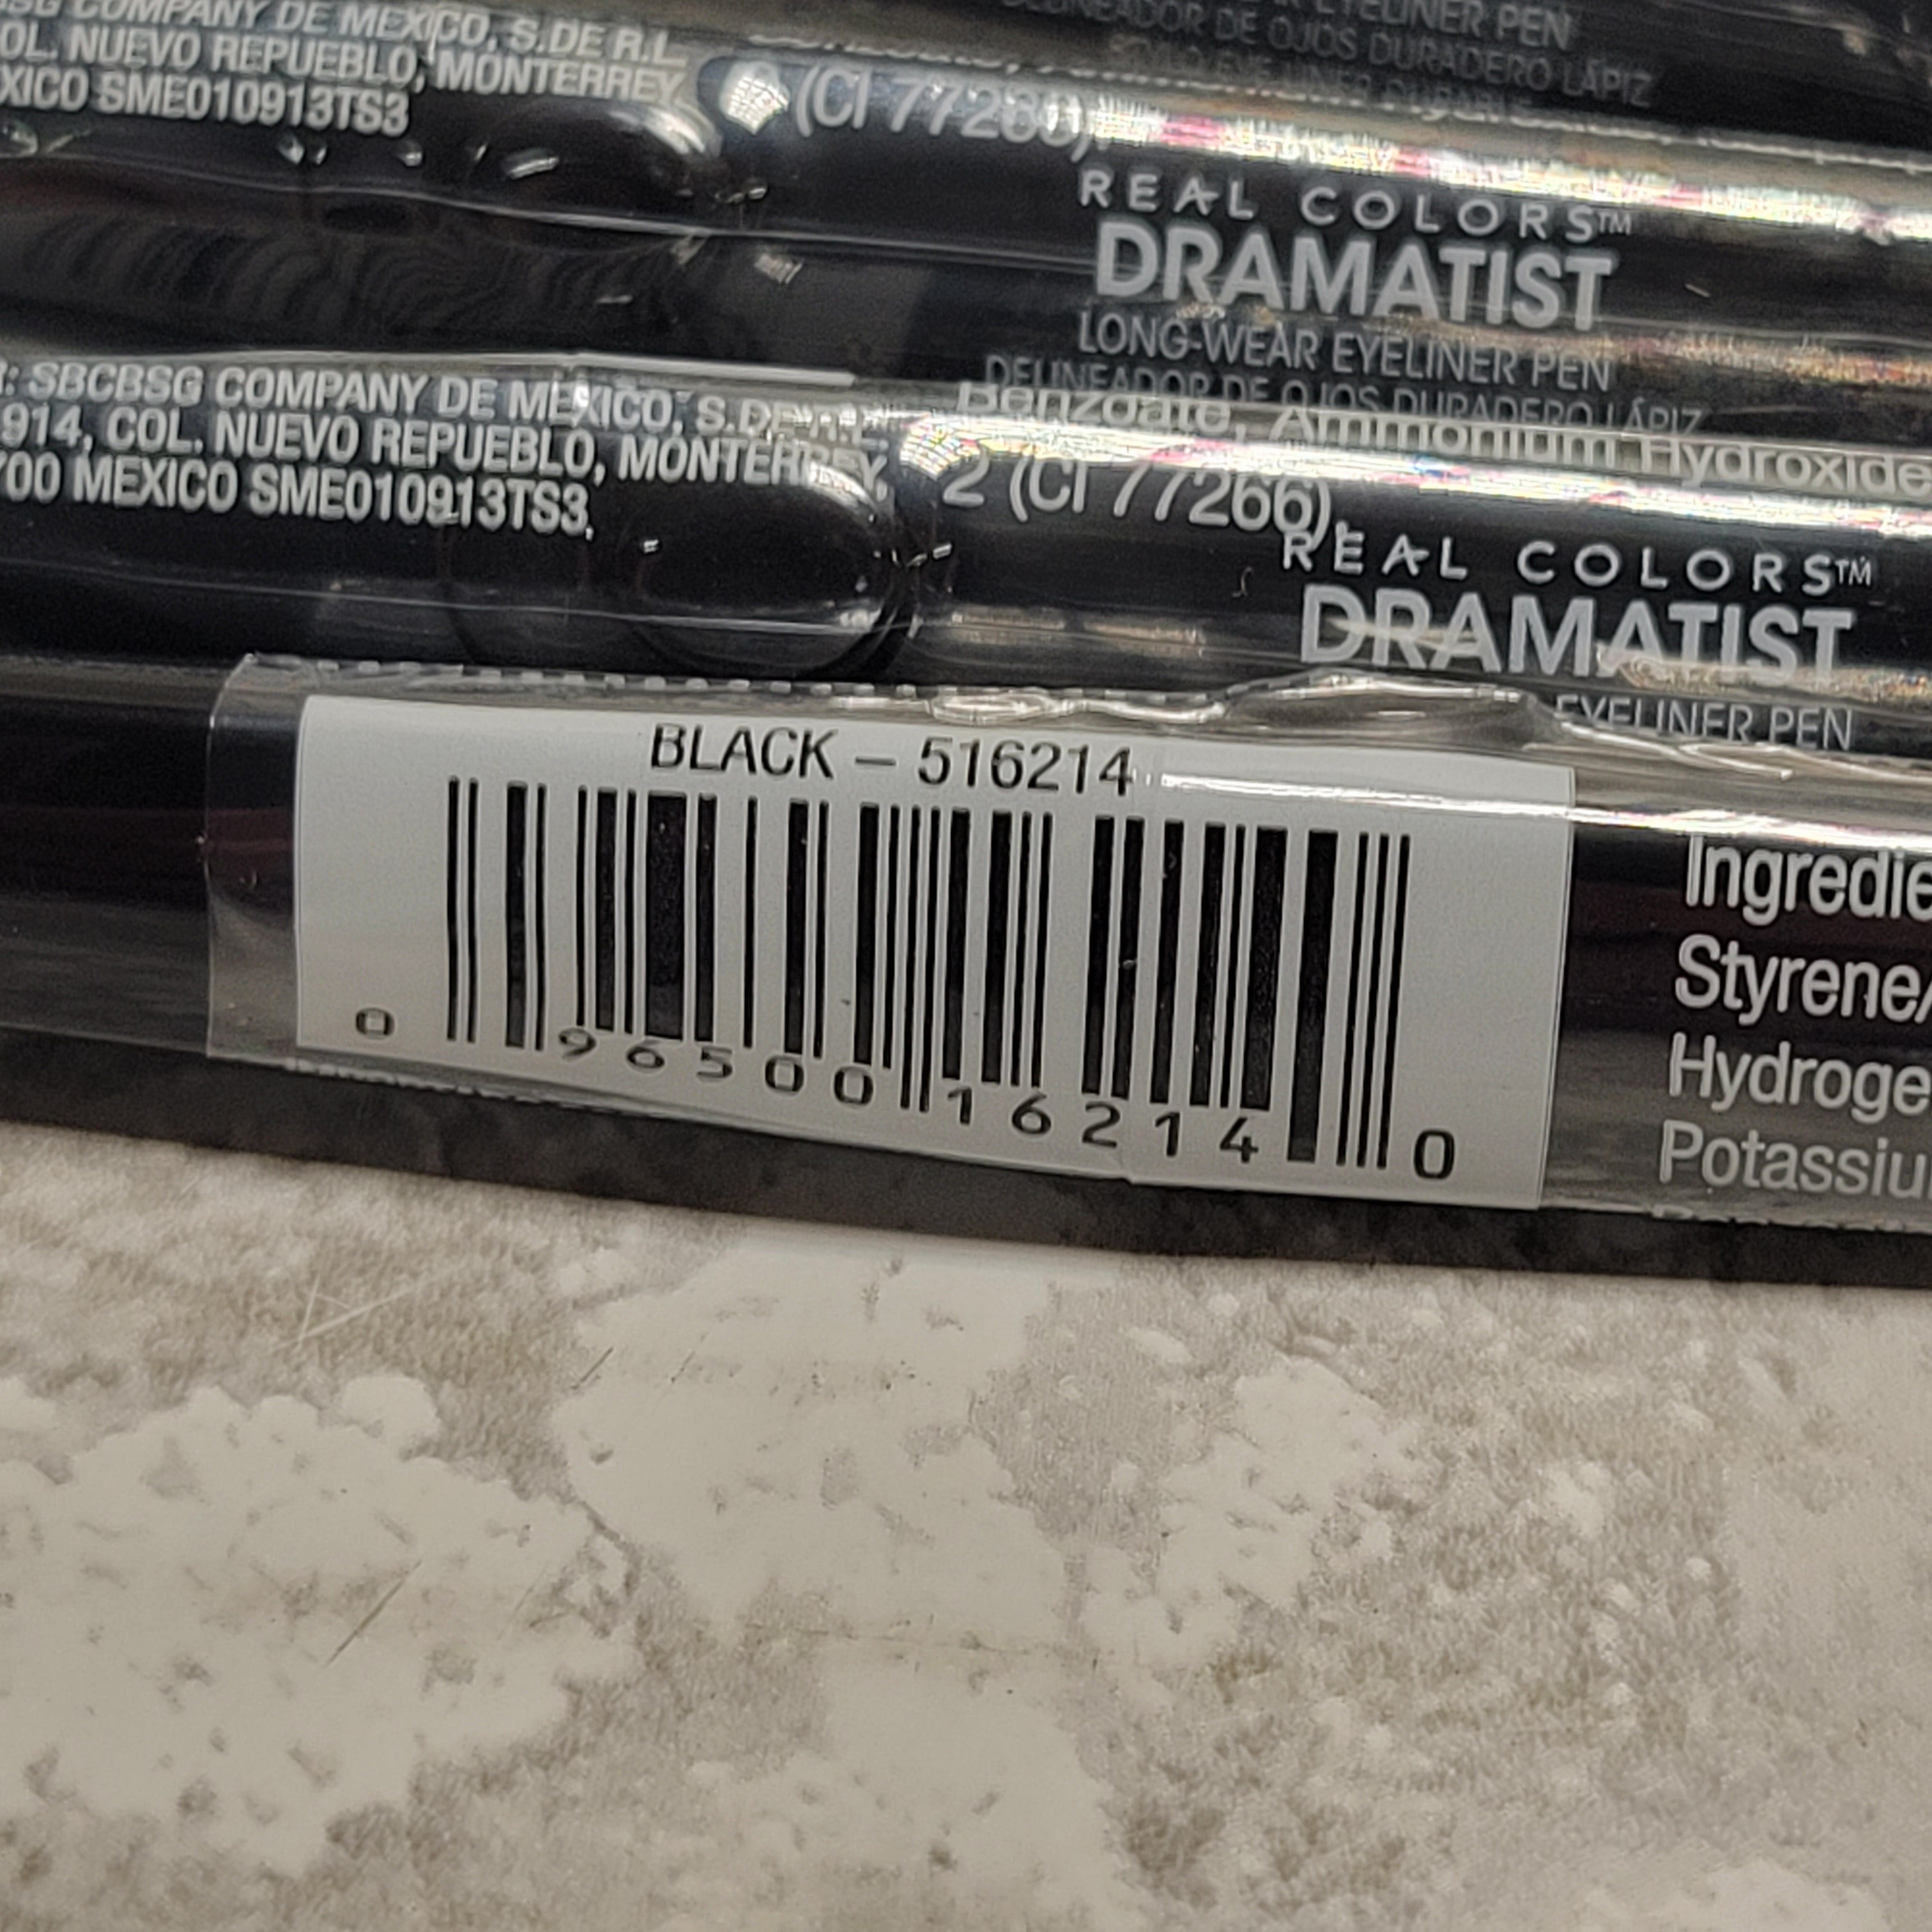 Eyeliner Pen Real Colors Dramatist Long-Wear Eyeliner Pen, Black, Lot of 5 (8063372165358)